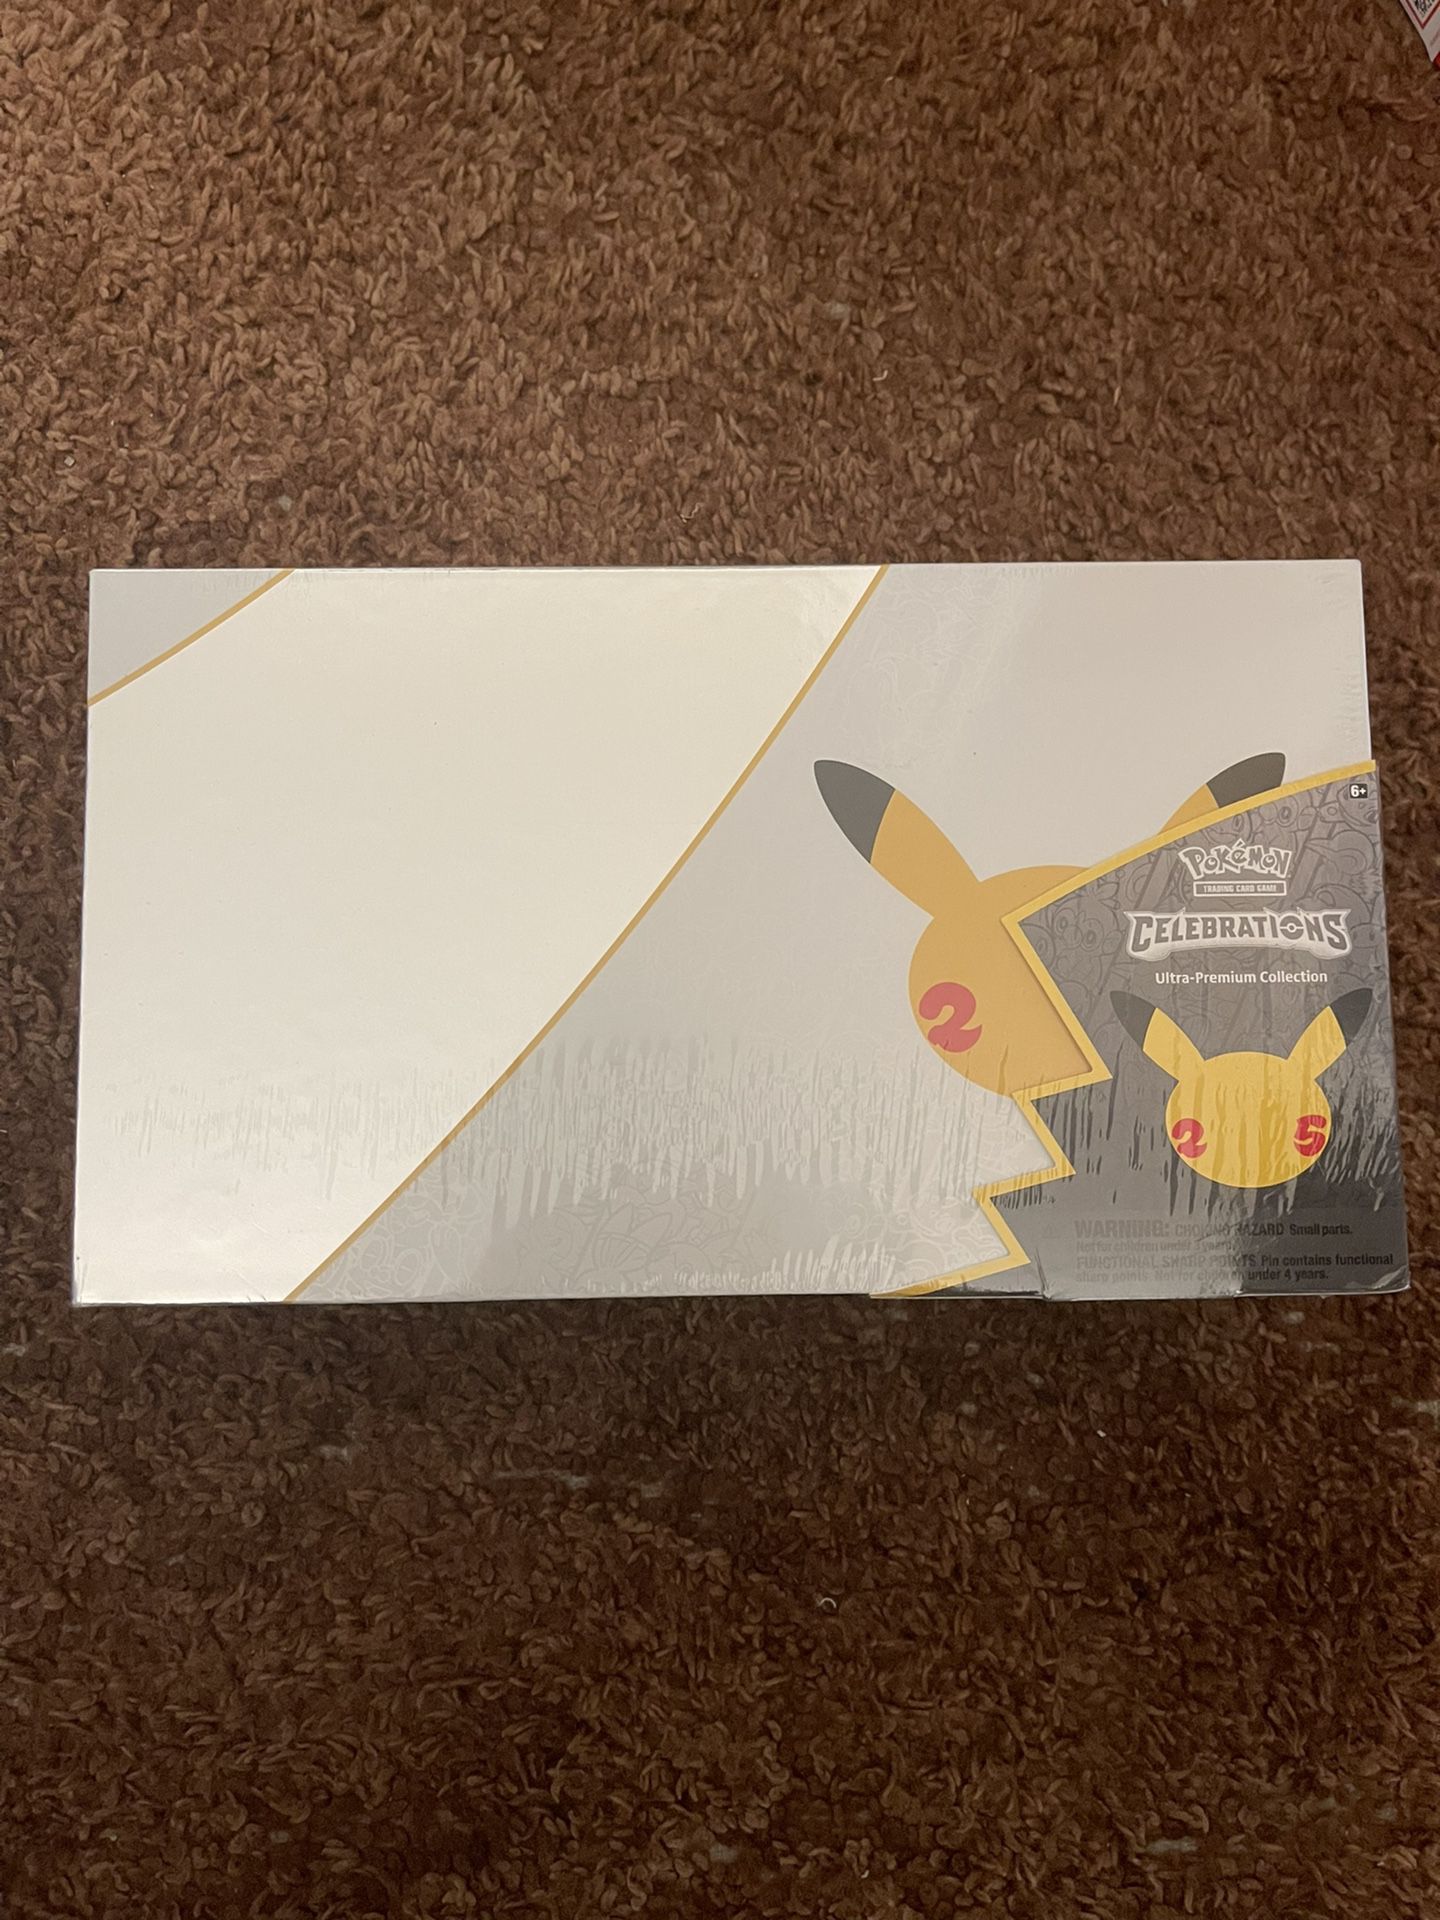 Pokemon Celebrations Ultra Premium Collection Box Cards Charizard Pikachu Gold UPC